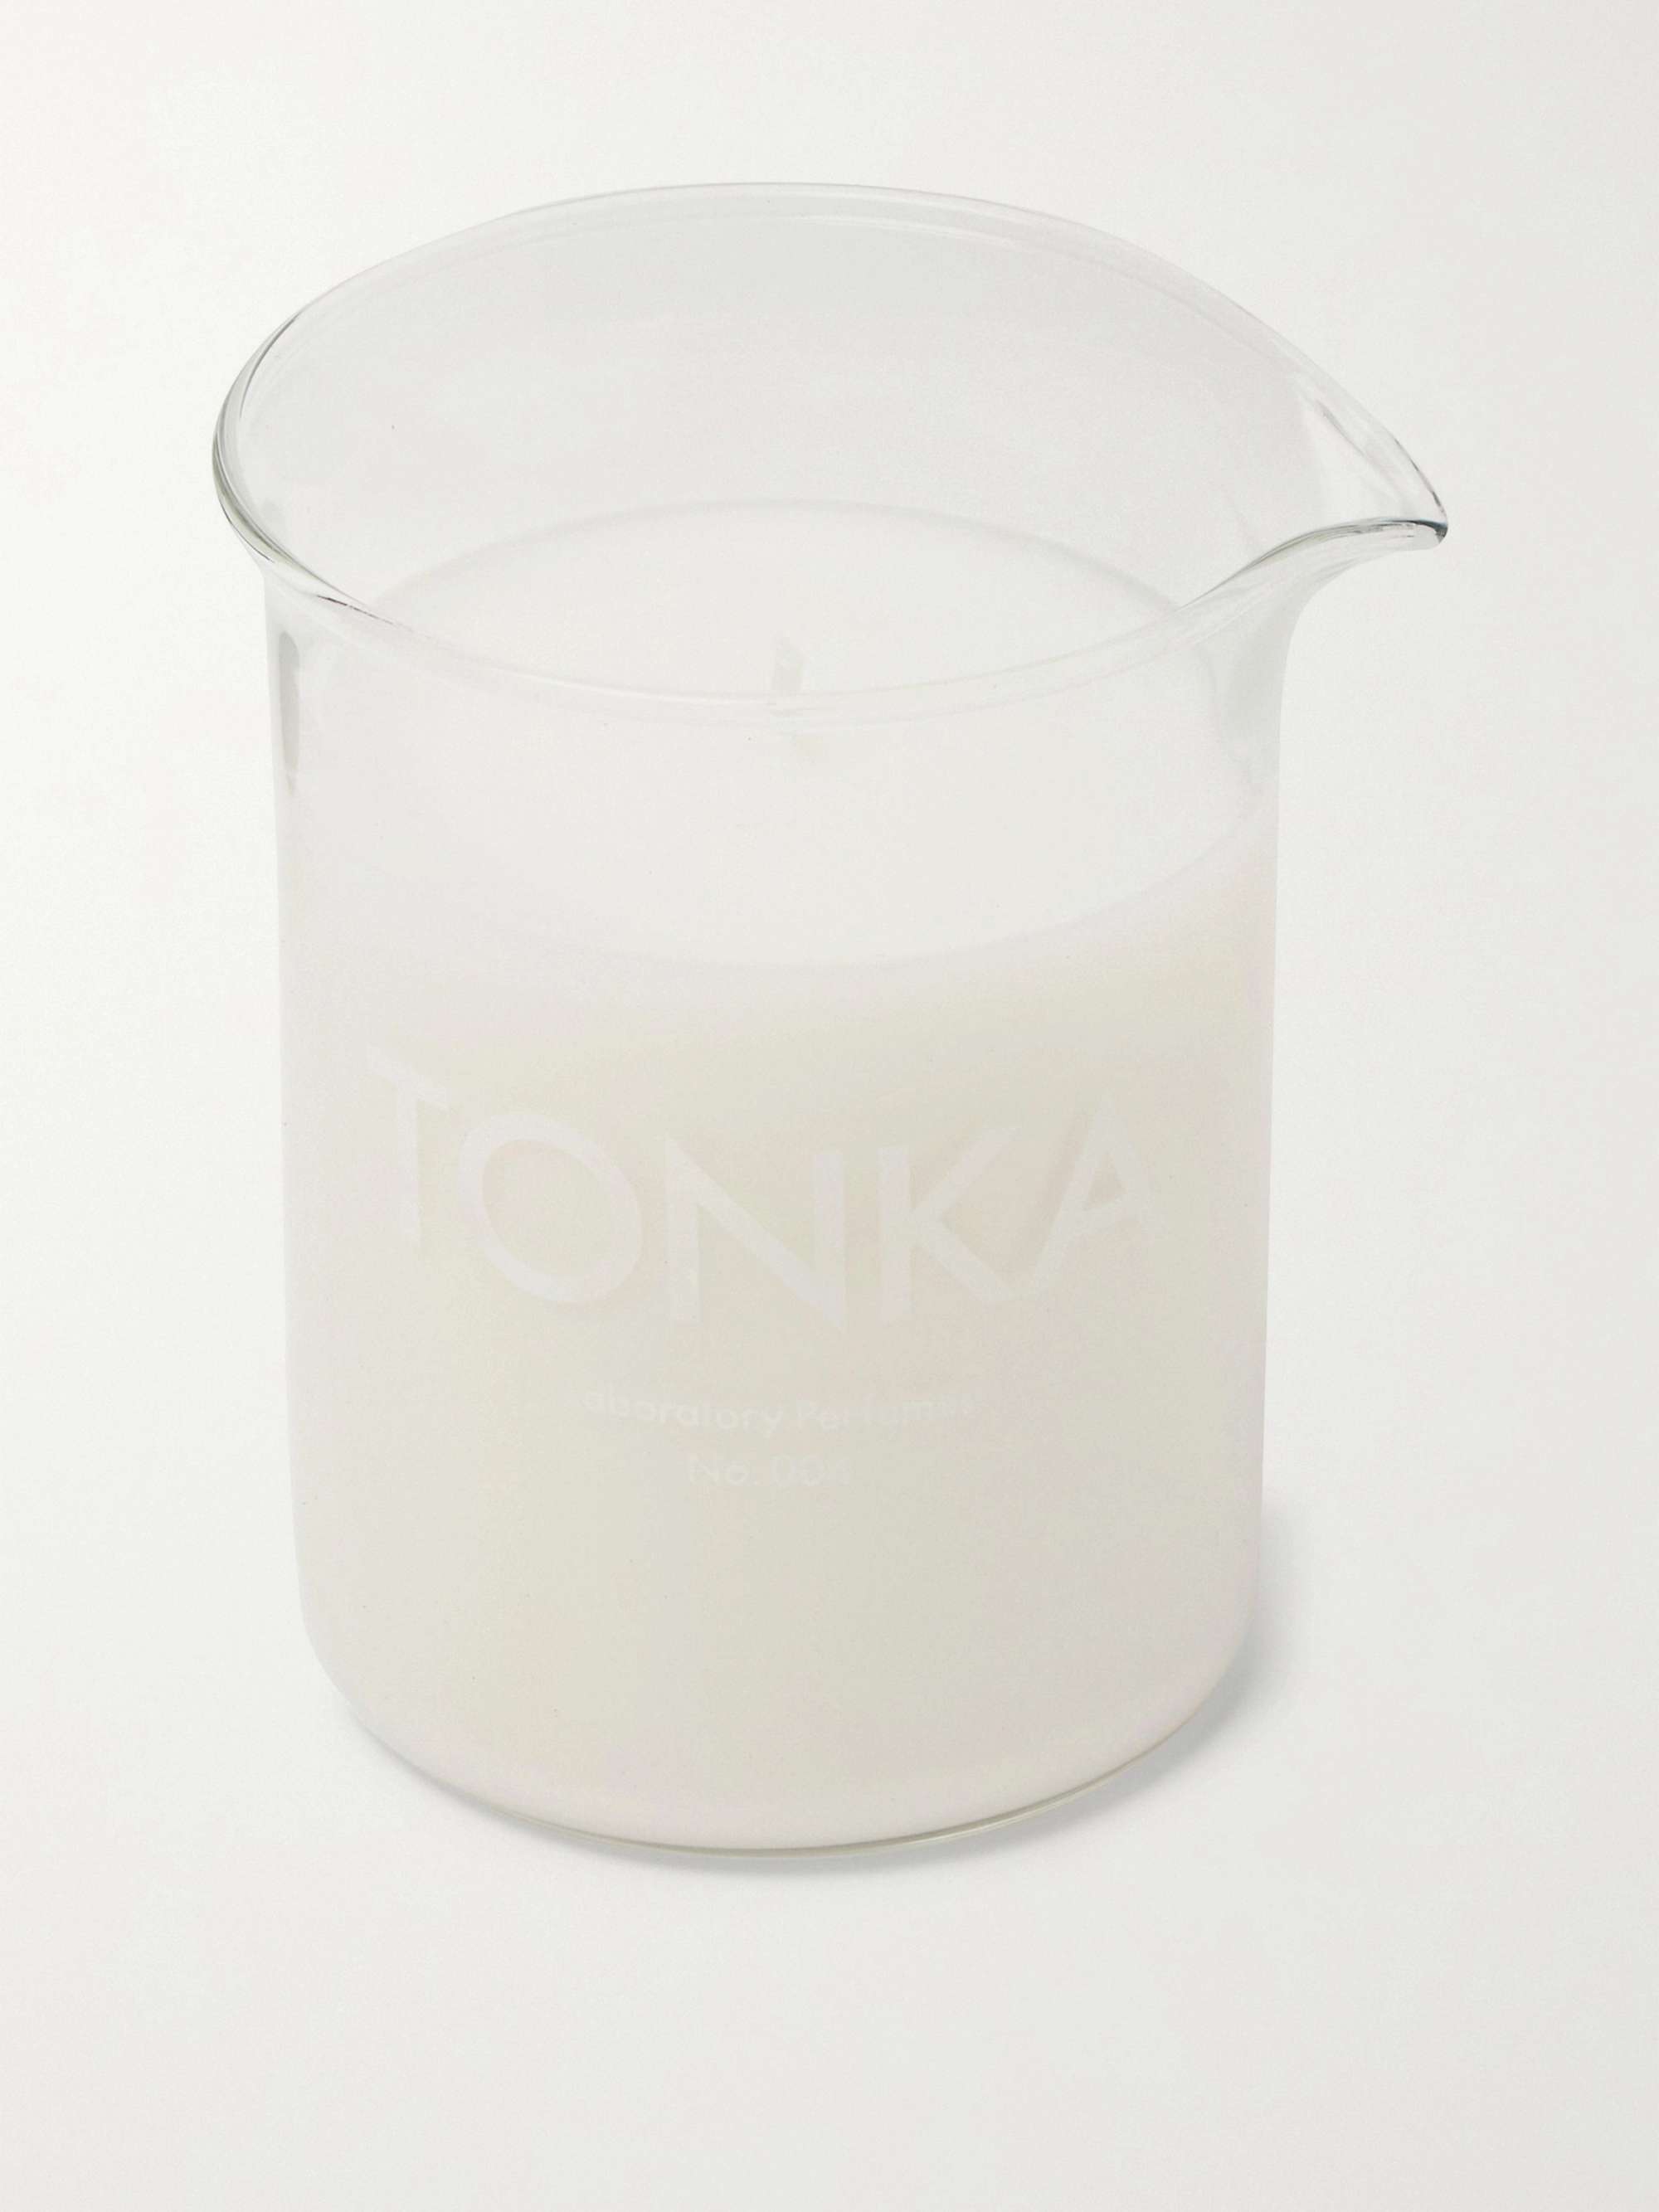 Laboratory Perfumes No. 004 Tonka Candle, 200g